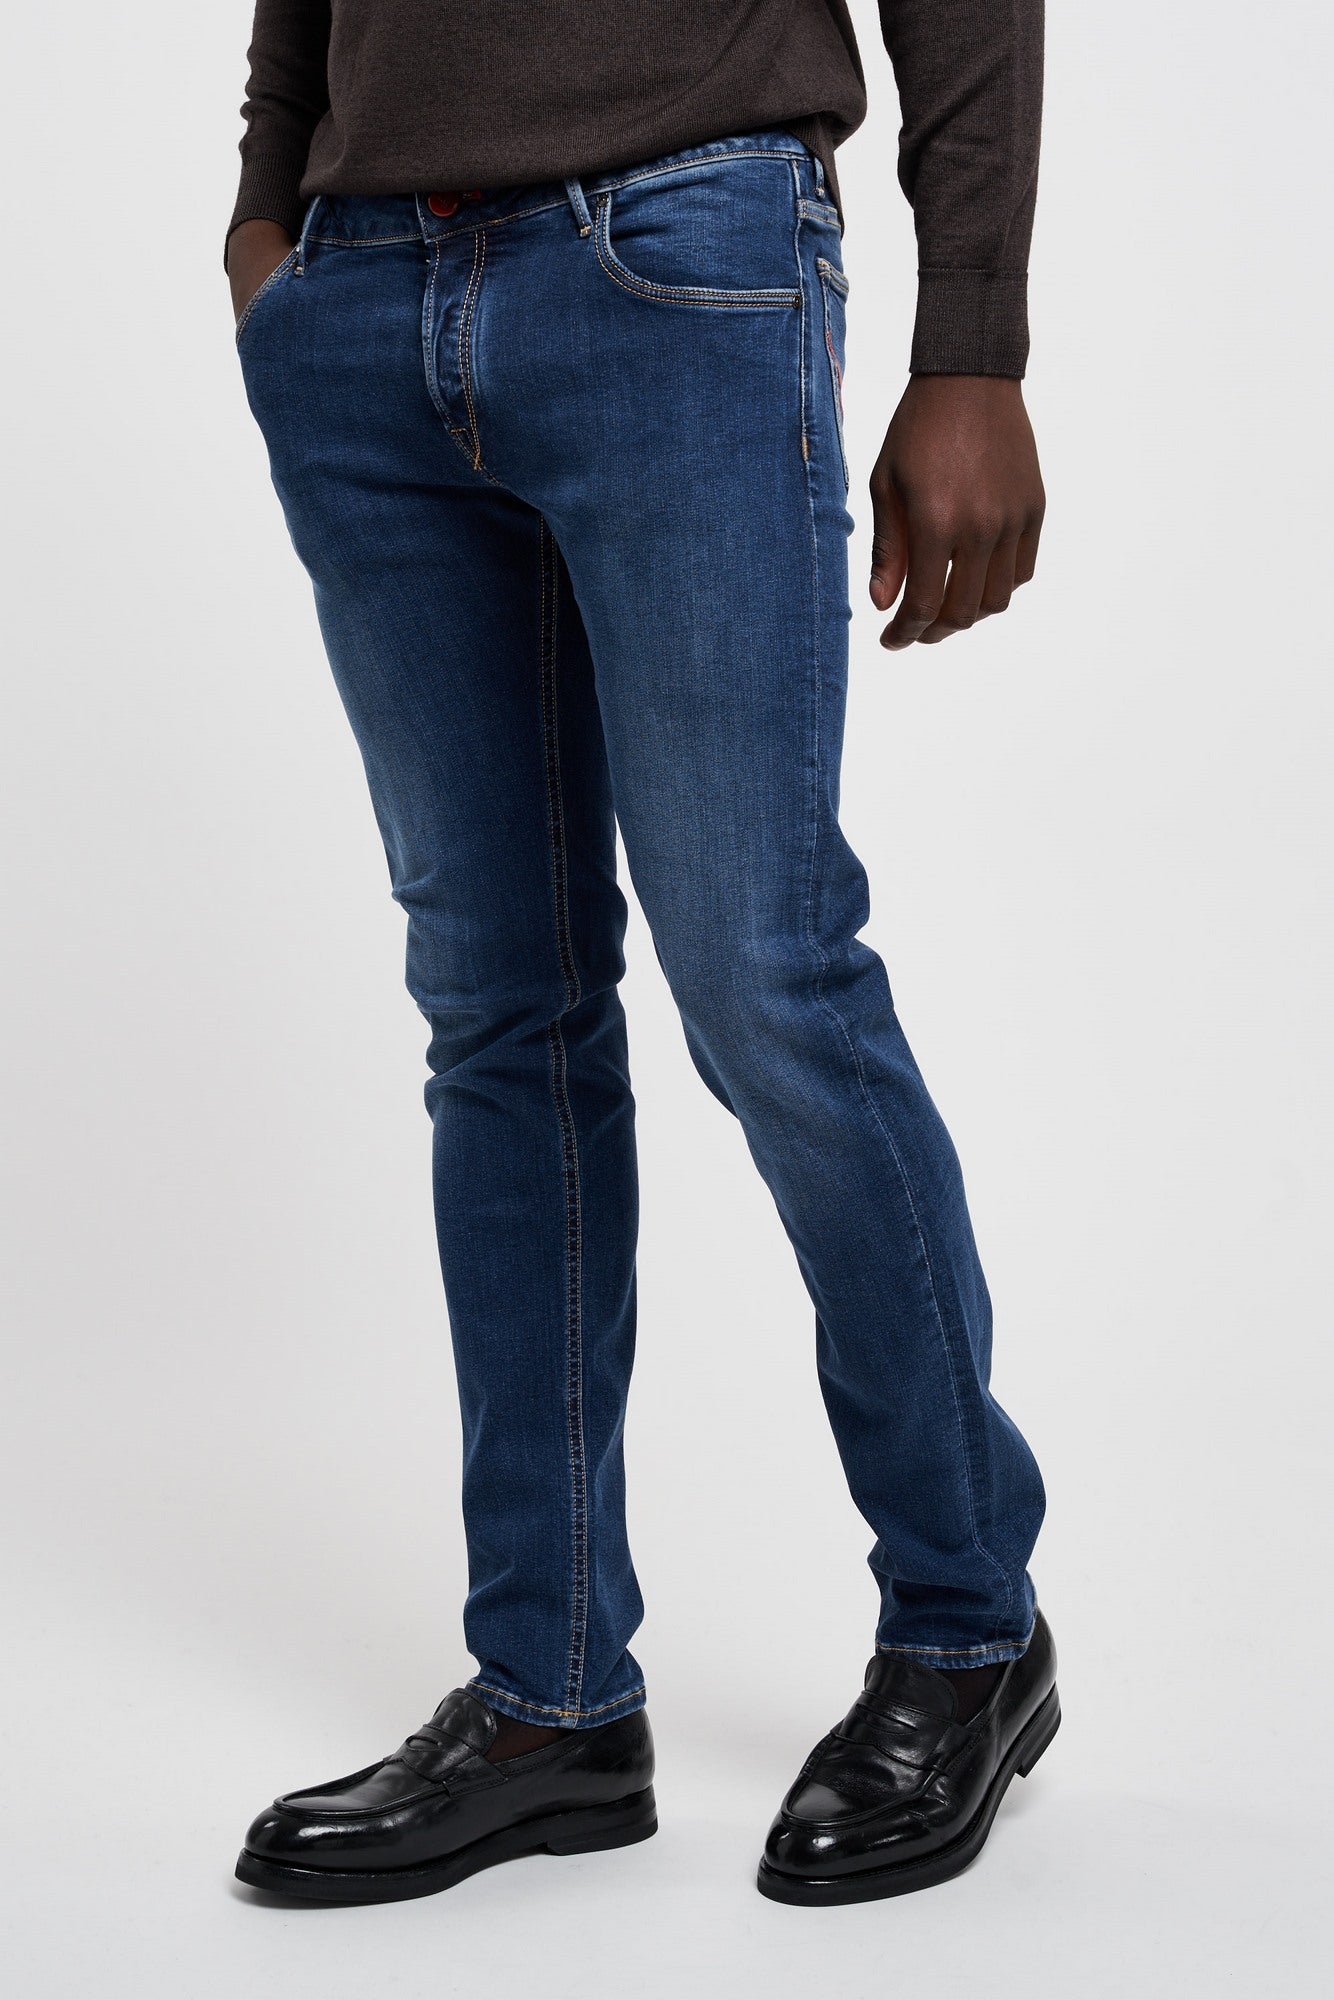 Handpicked Jeans Orvieto in Blue Cotton-5